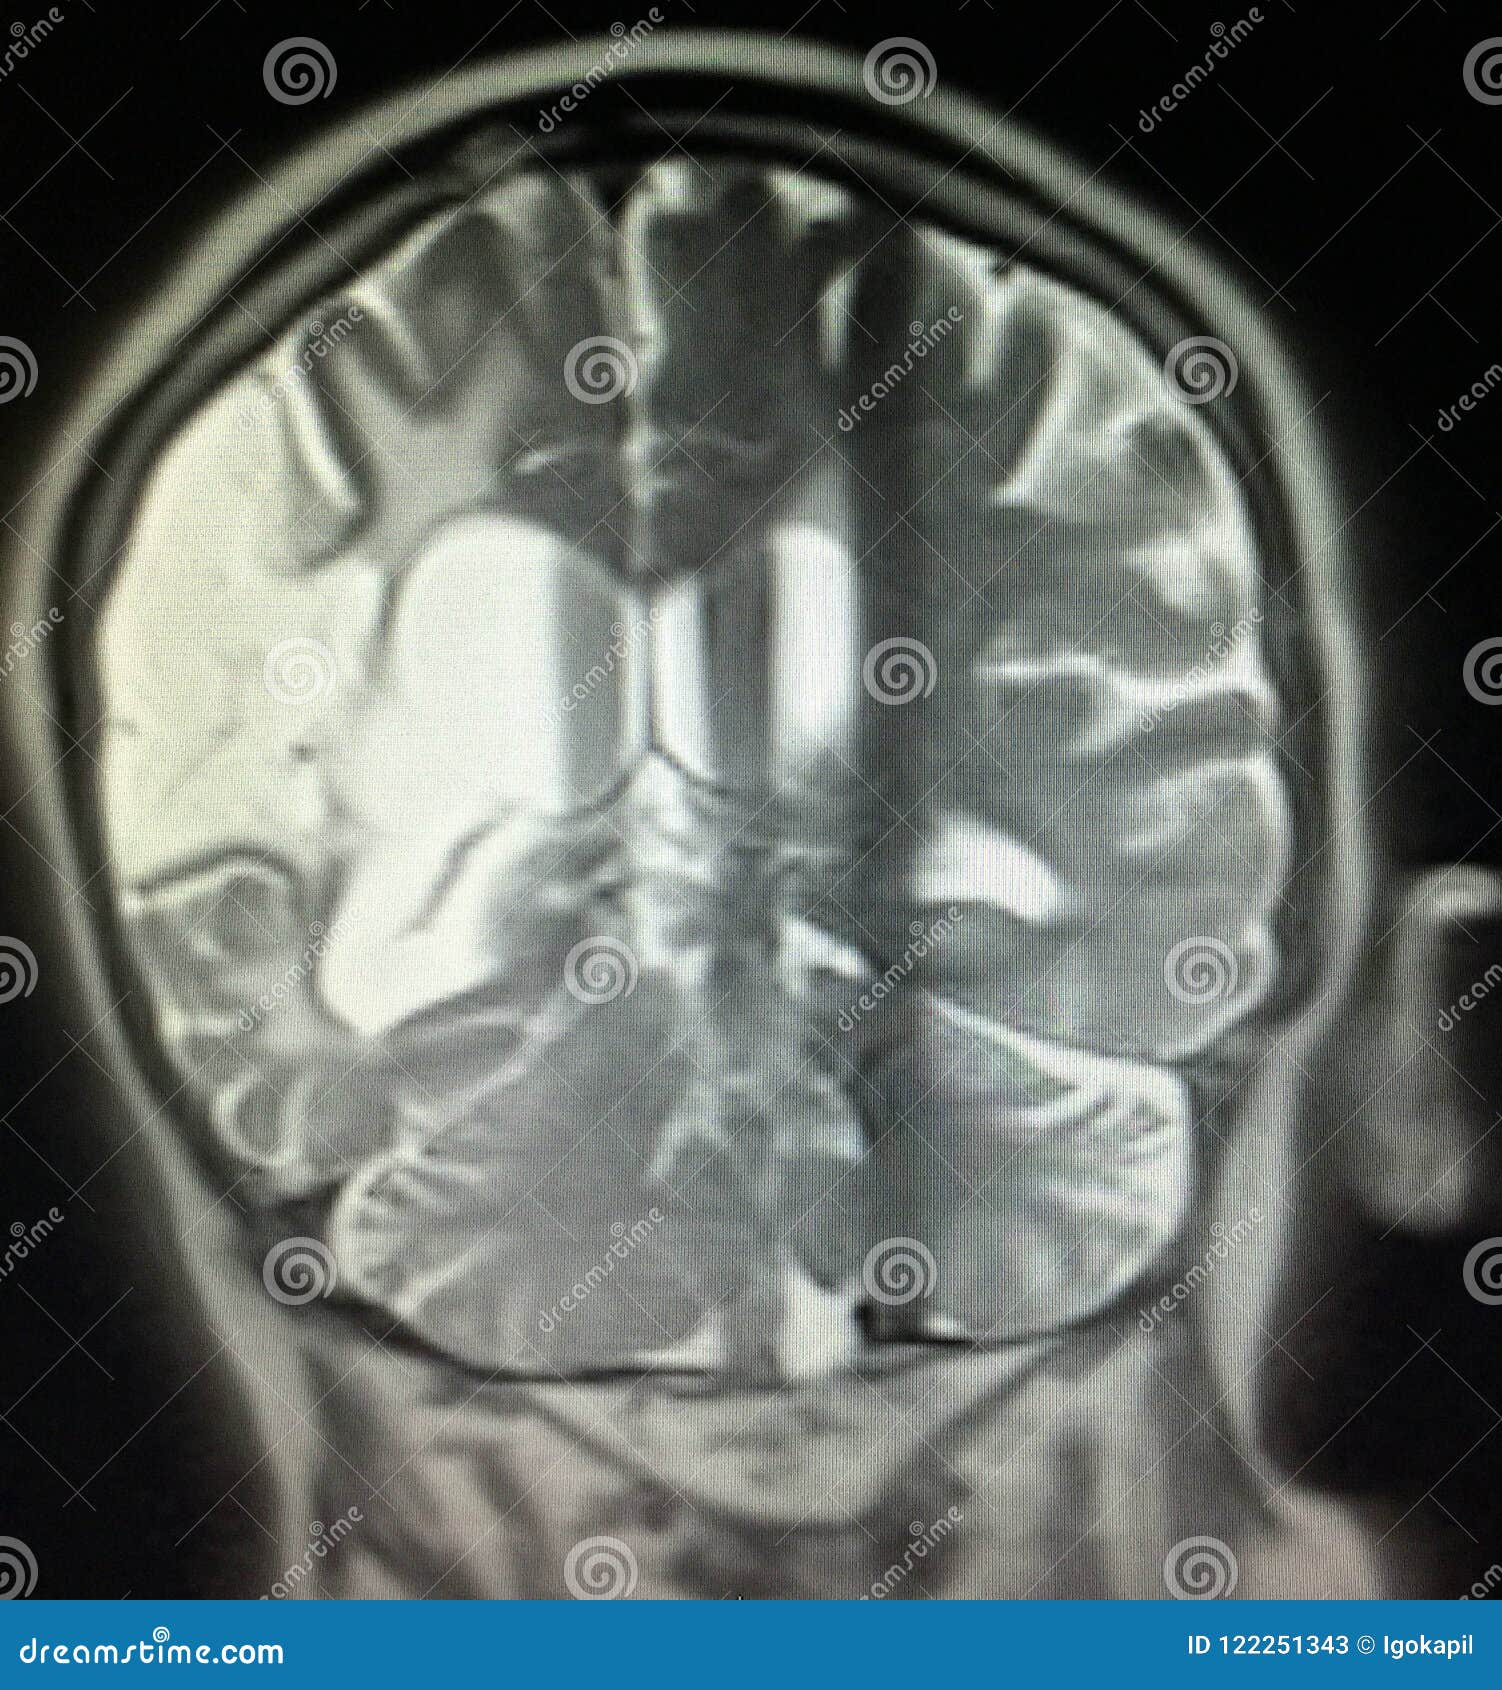 Acute Infarction Brain Mri Examination Stroke Stock Image - Image of ...